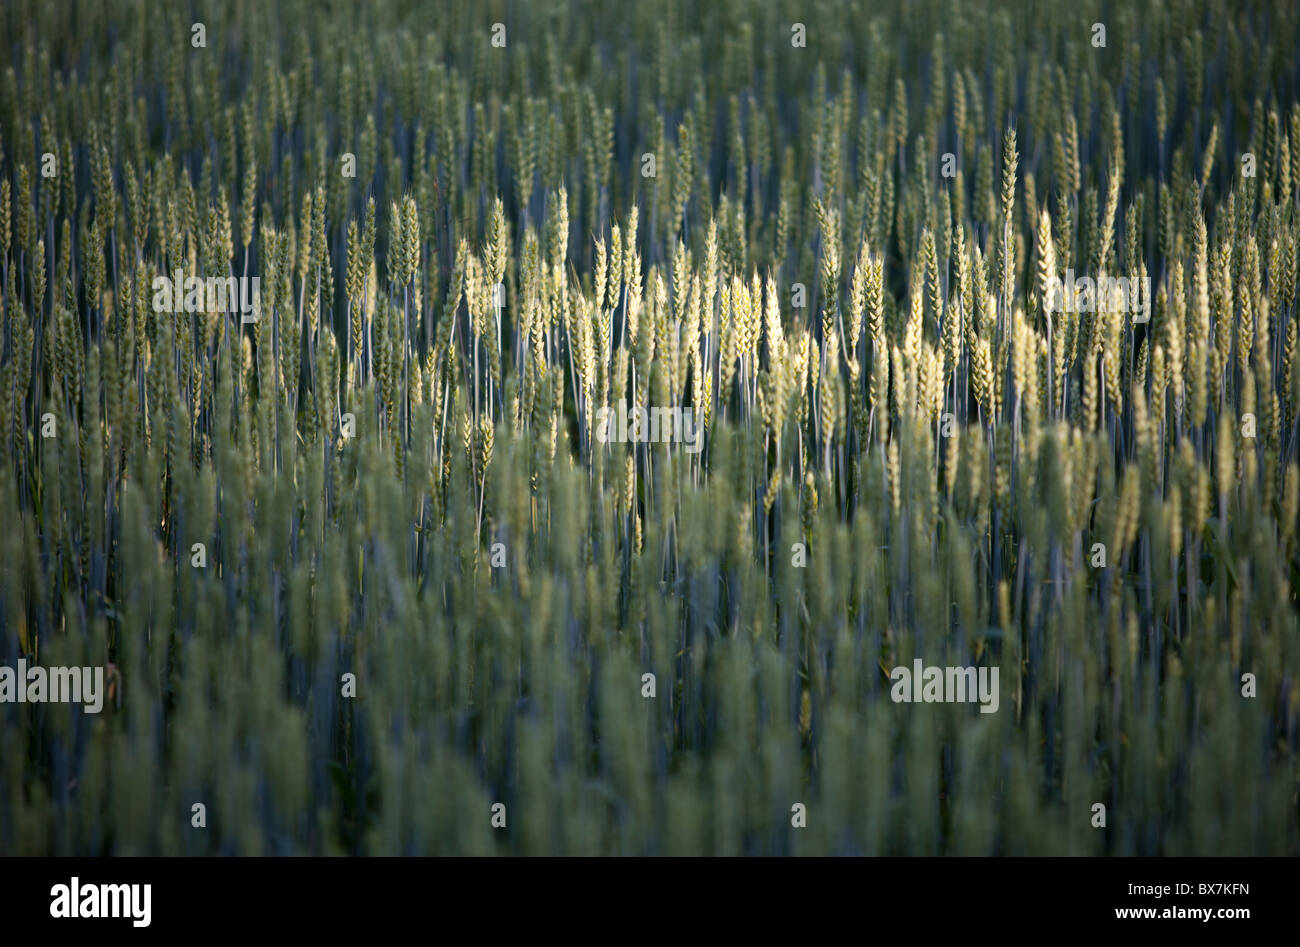 Growing bread wheat ears ( Triticum aestivum ) , Finland Stock Photo